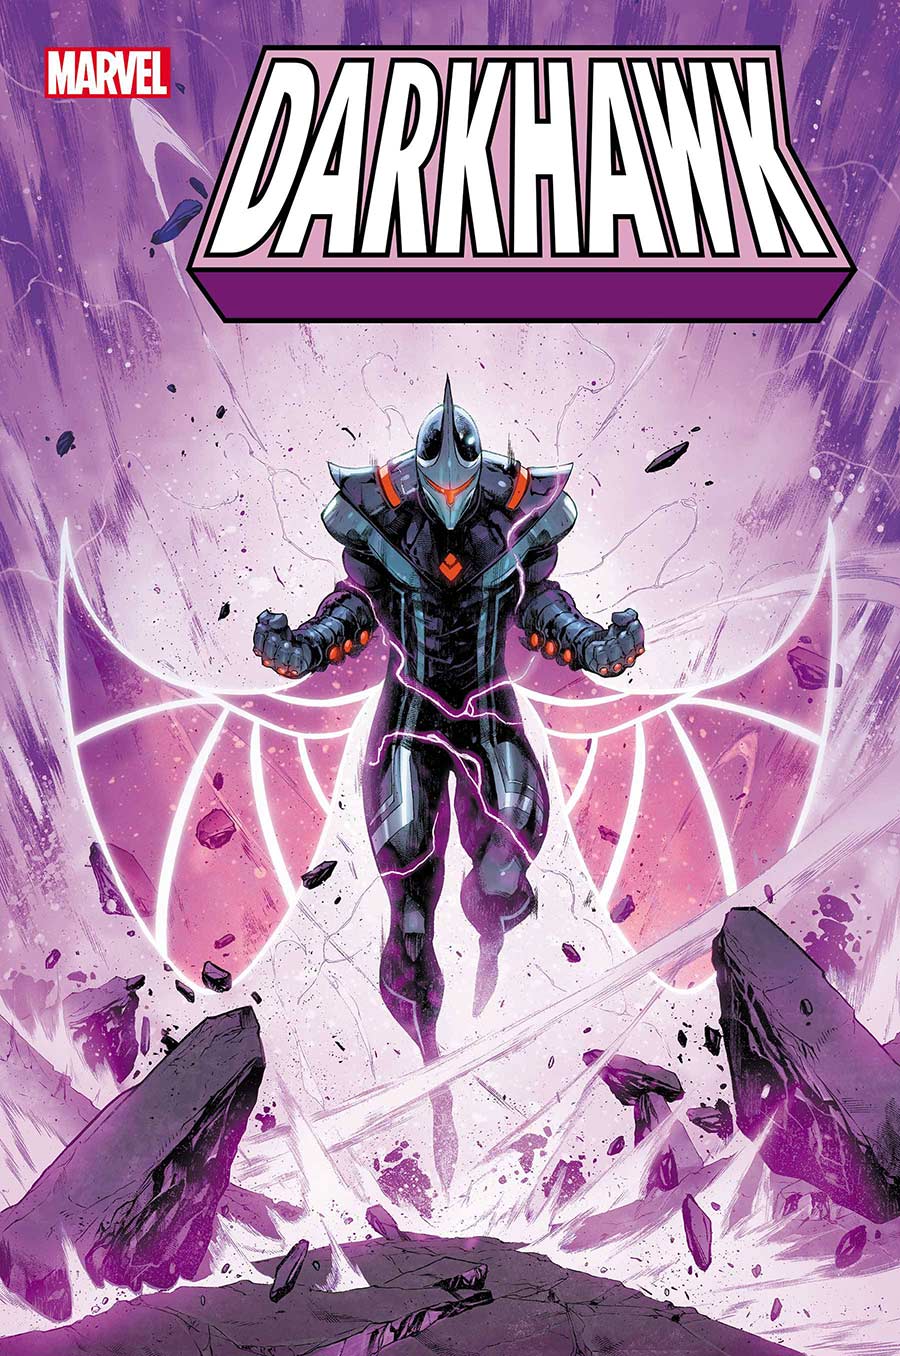 Darkhawk